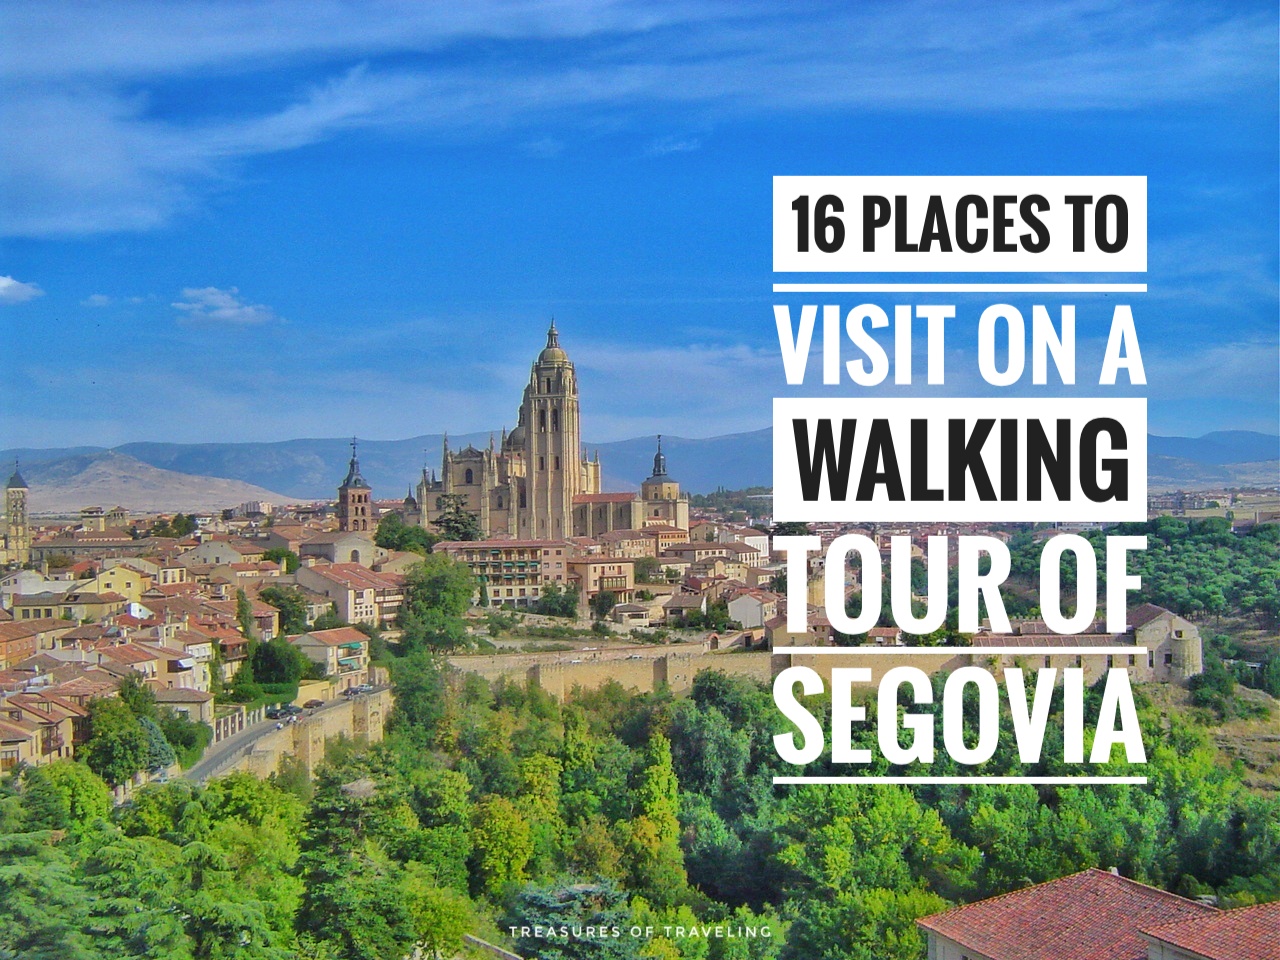 16 Places to Visit on a Walking Tour of Segovia! - Treasures